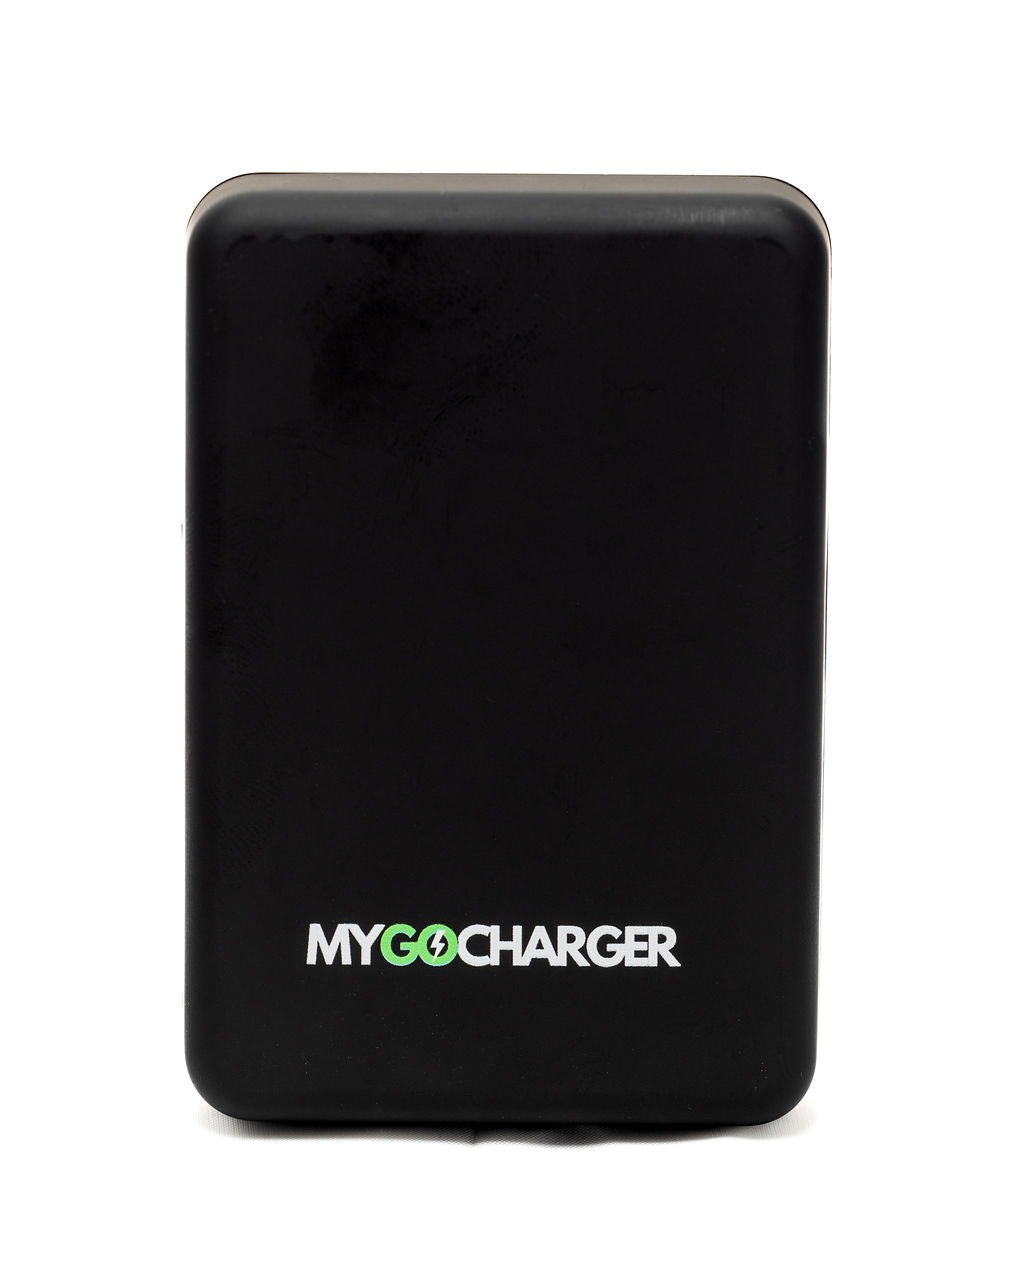 Magnetic Power Bank 5000 mAh 2.0 – mygocharger